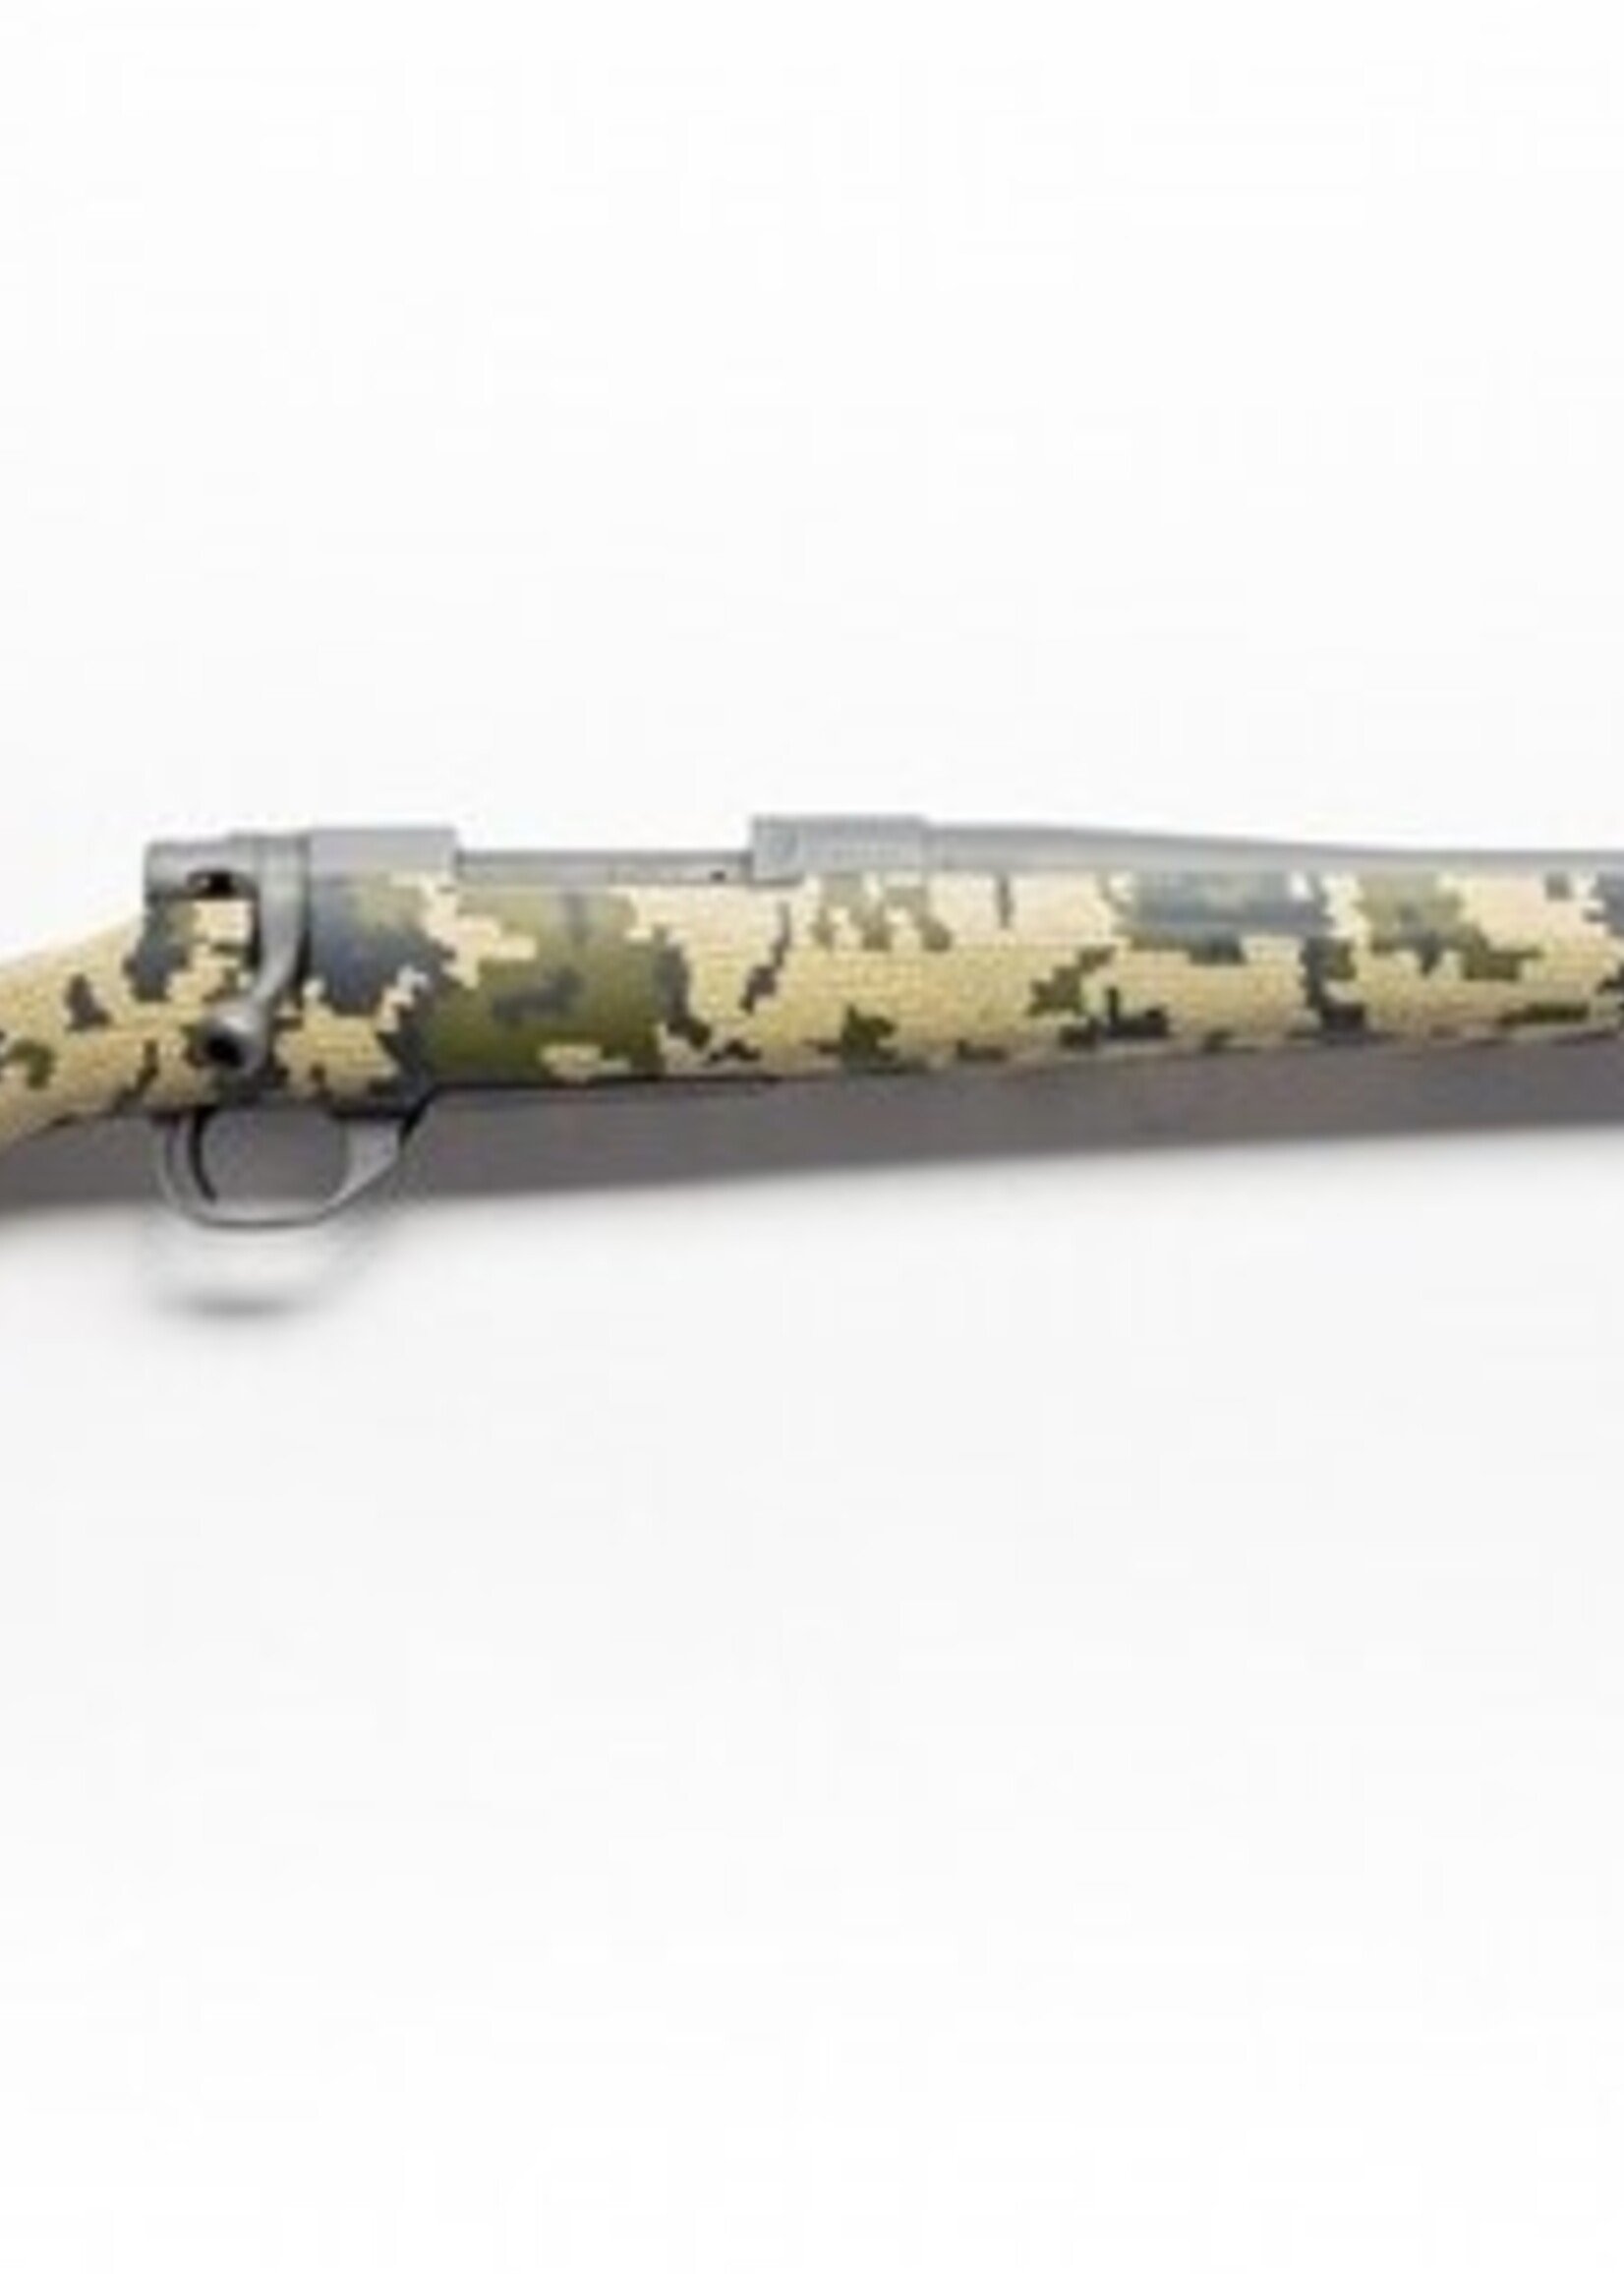 (USED) Howa 1500 .243 Rifle W/ 20" barrel and digital camo stock